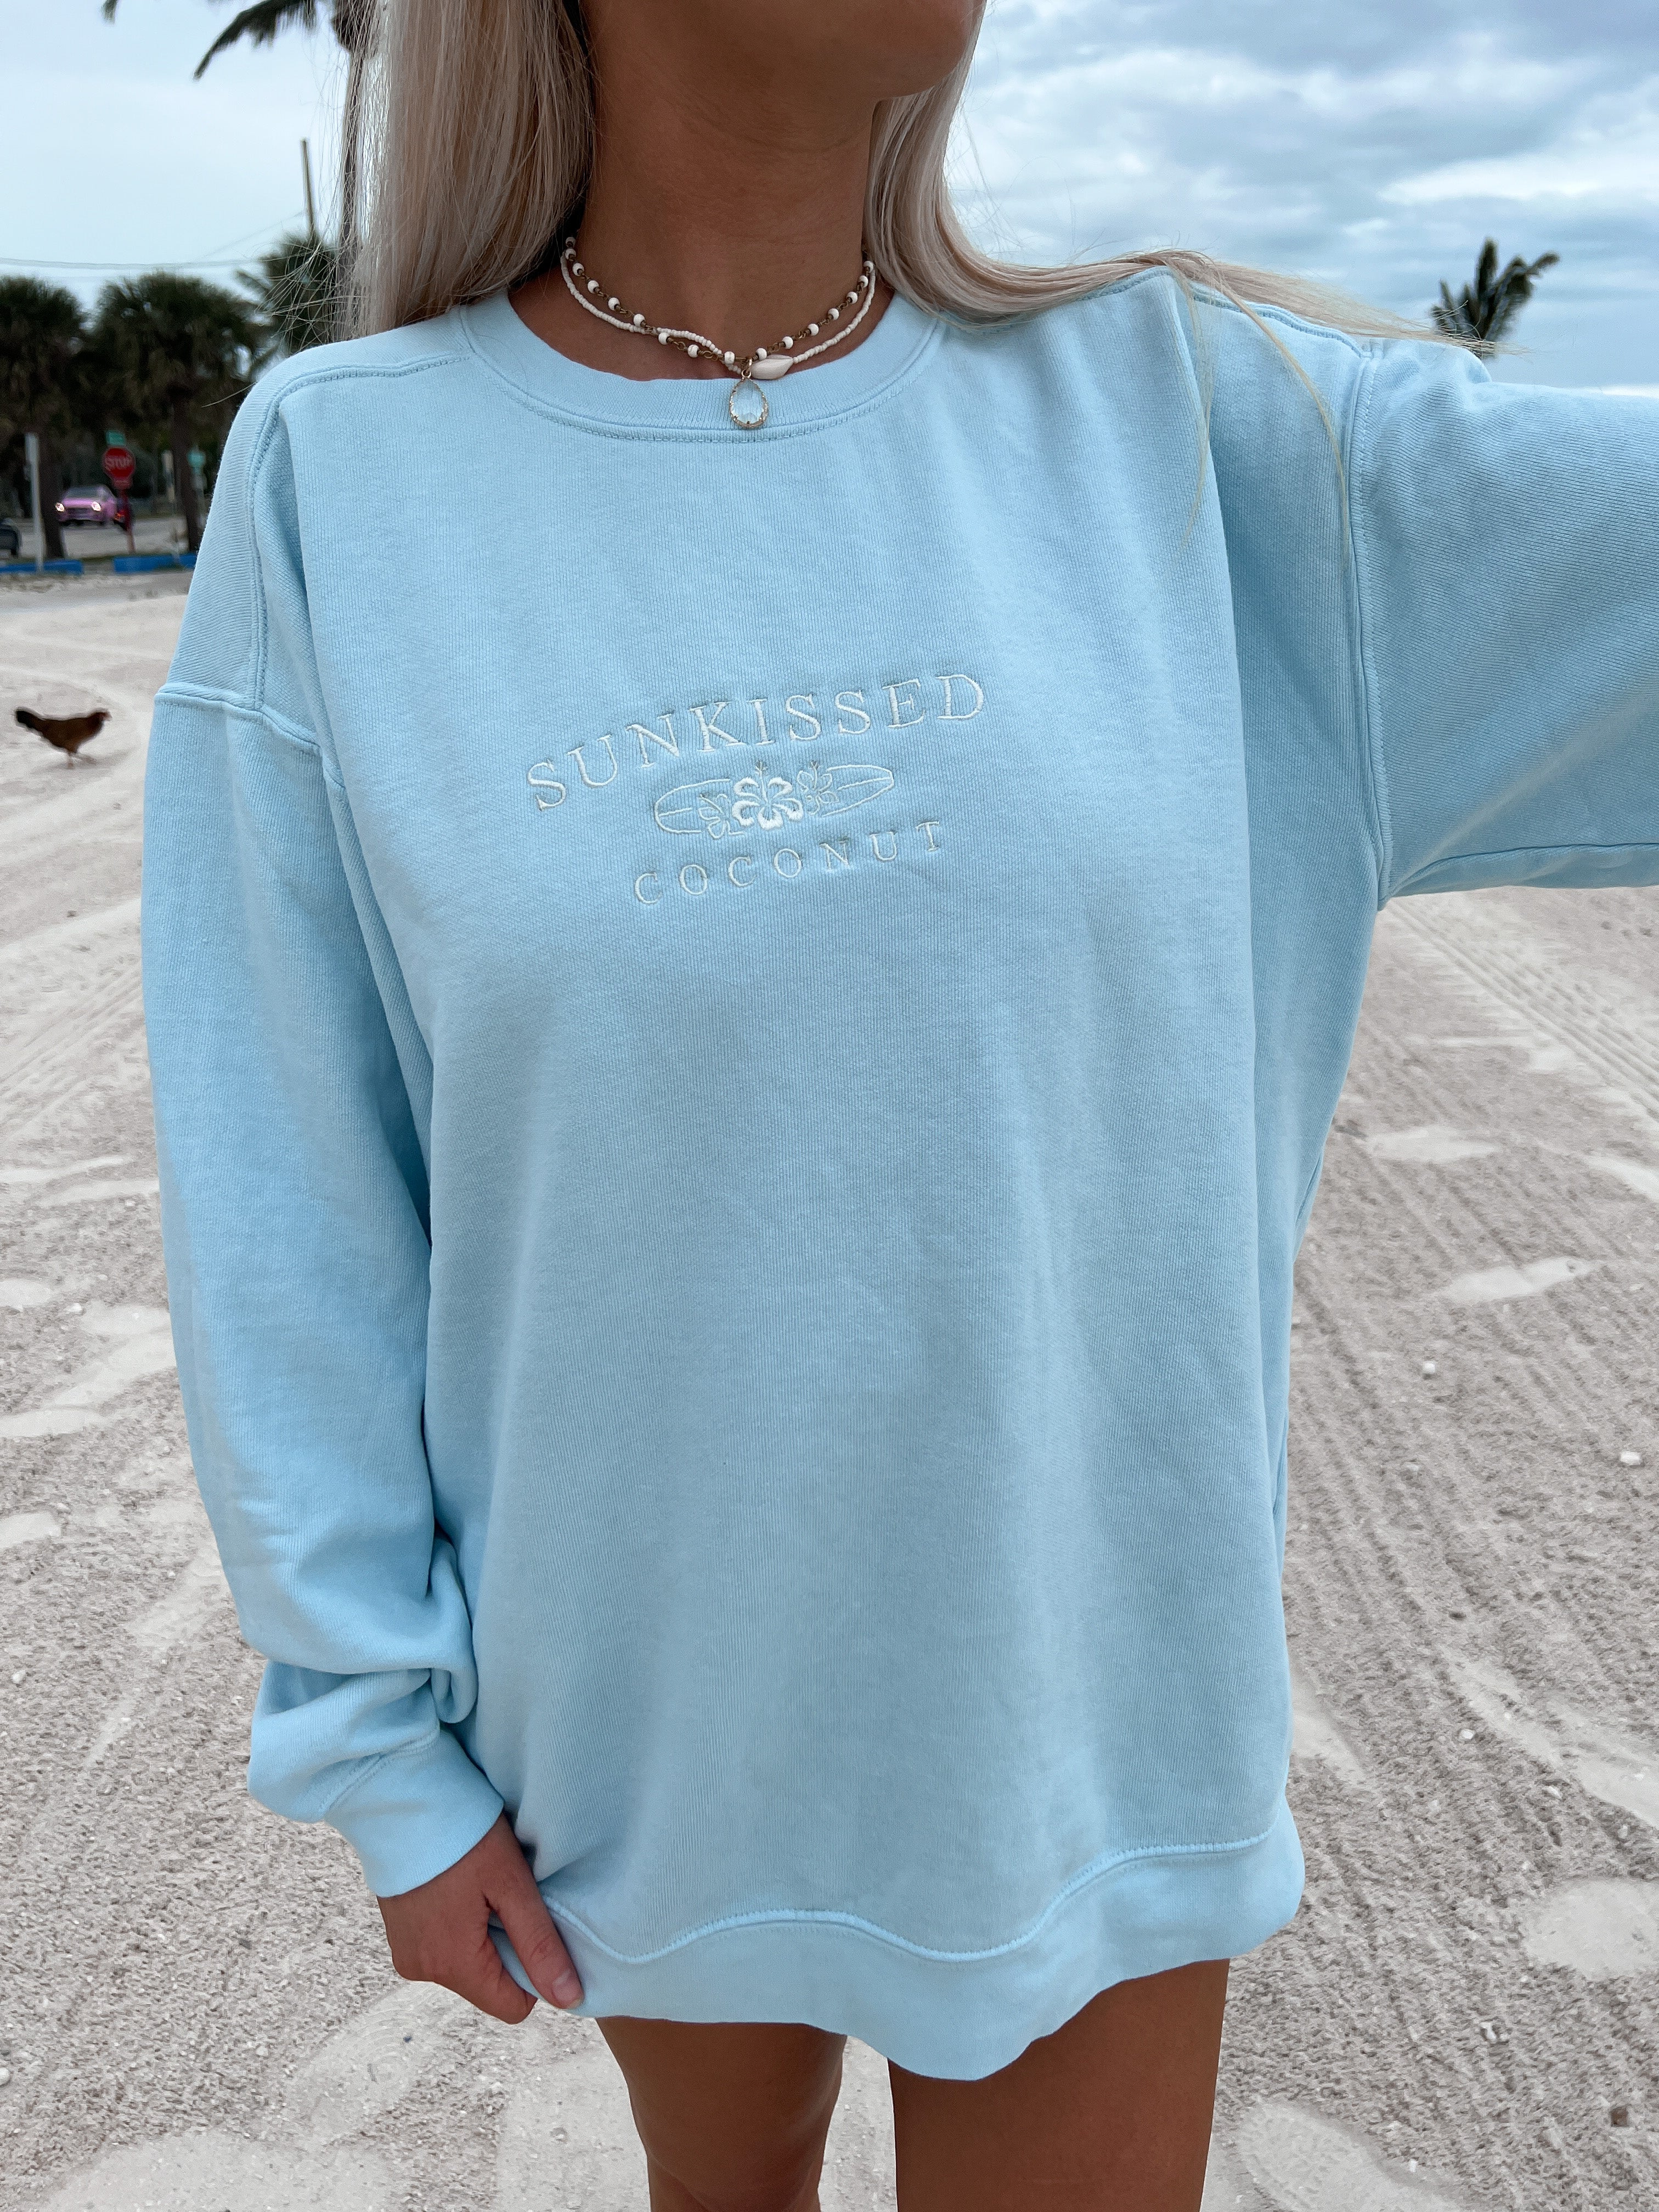 Sweatshirt Sunkissedcoconut Colors Comfort Embroider